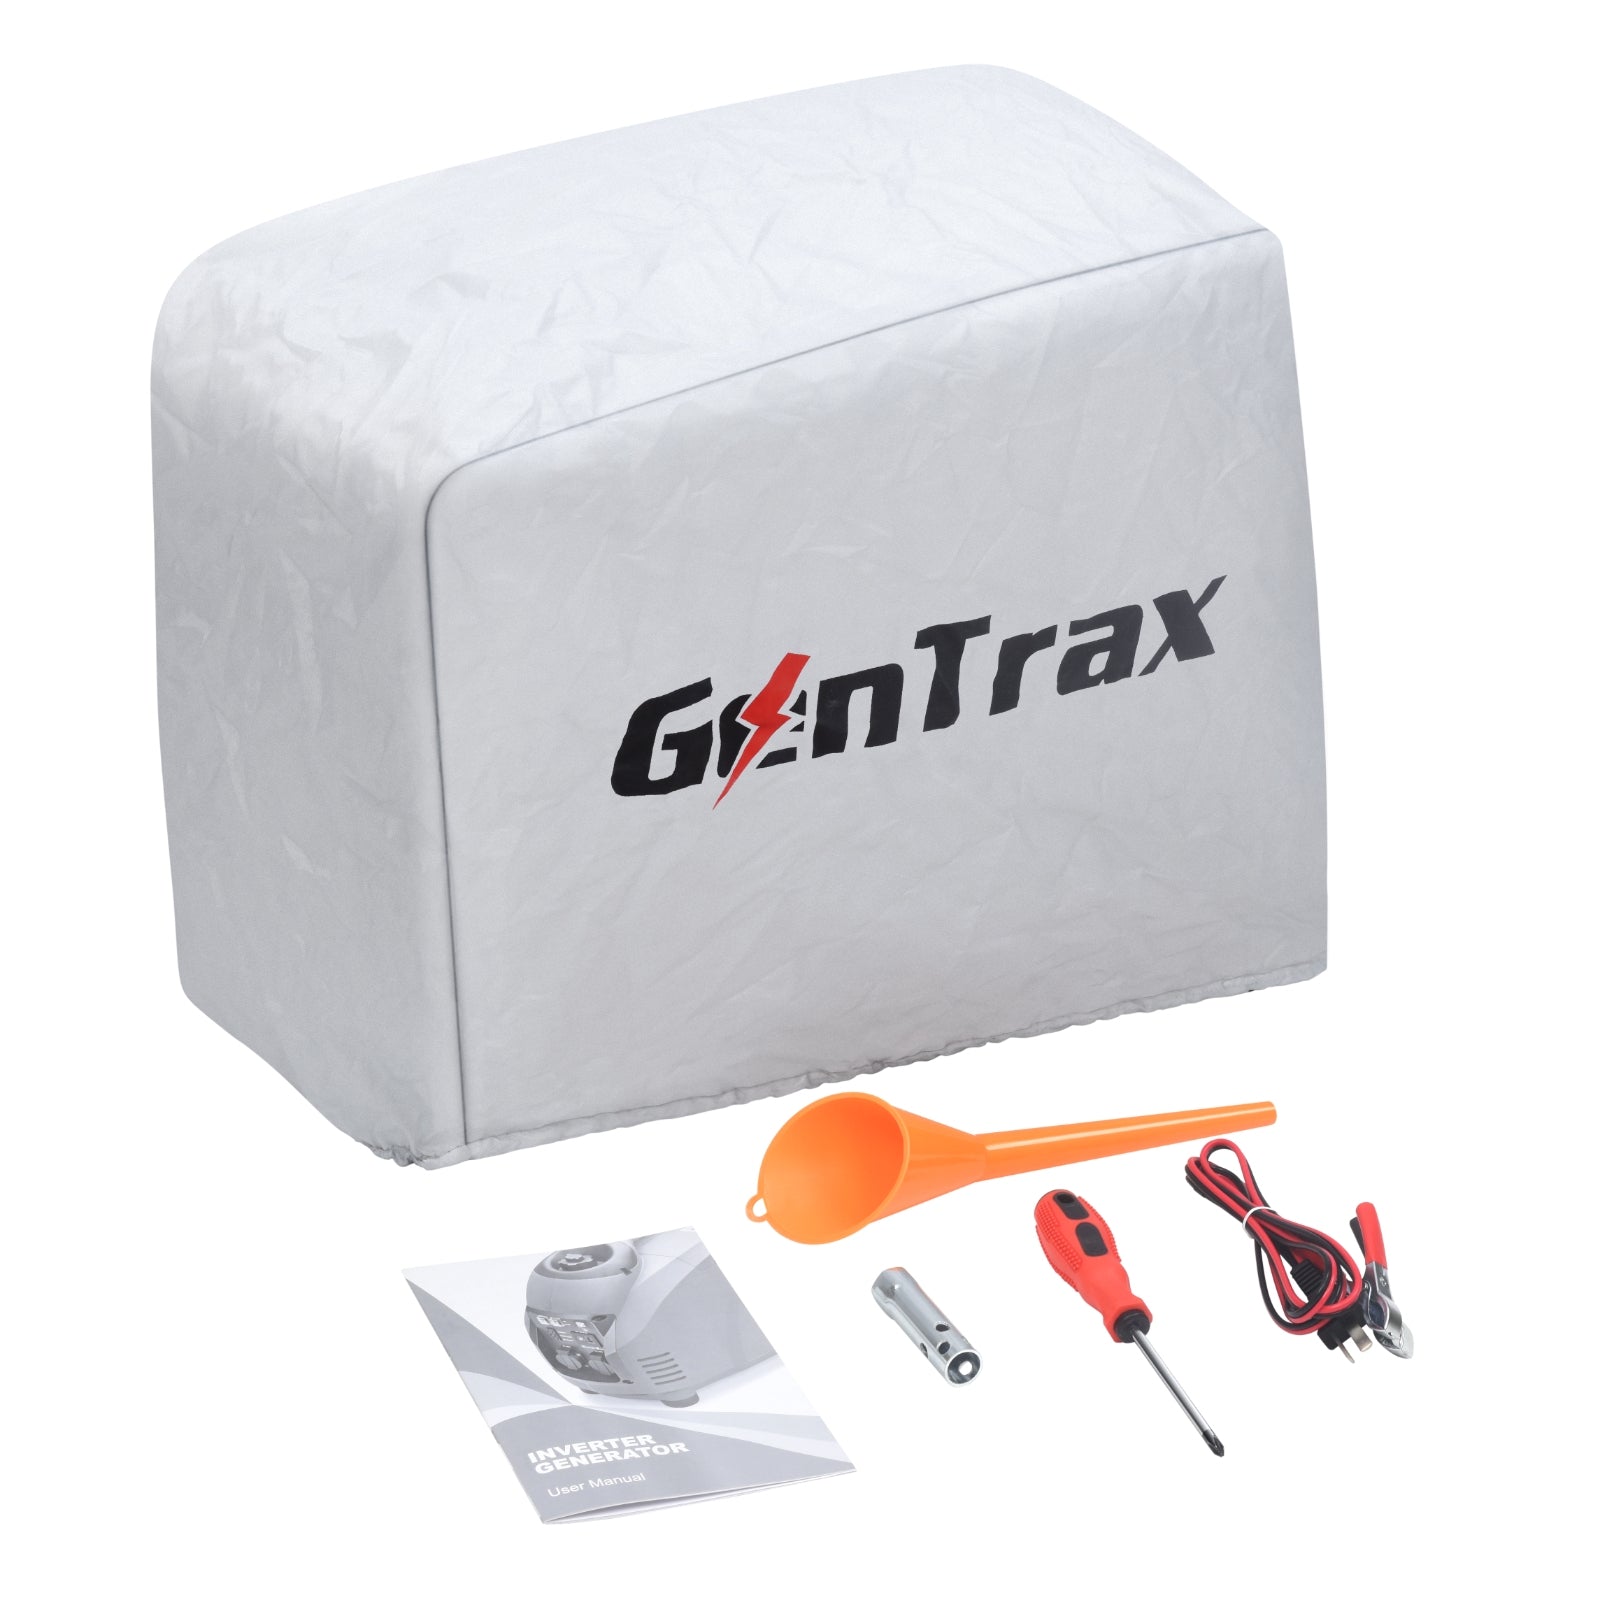 Gentrax GT3500 Inverter Generator